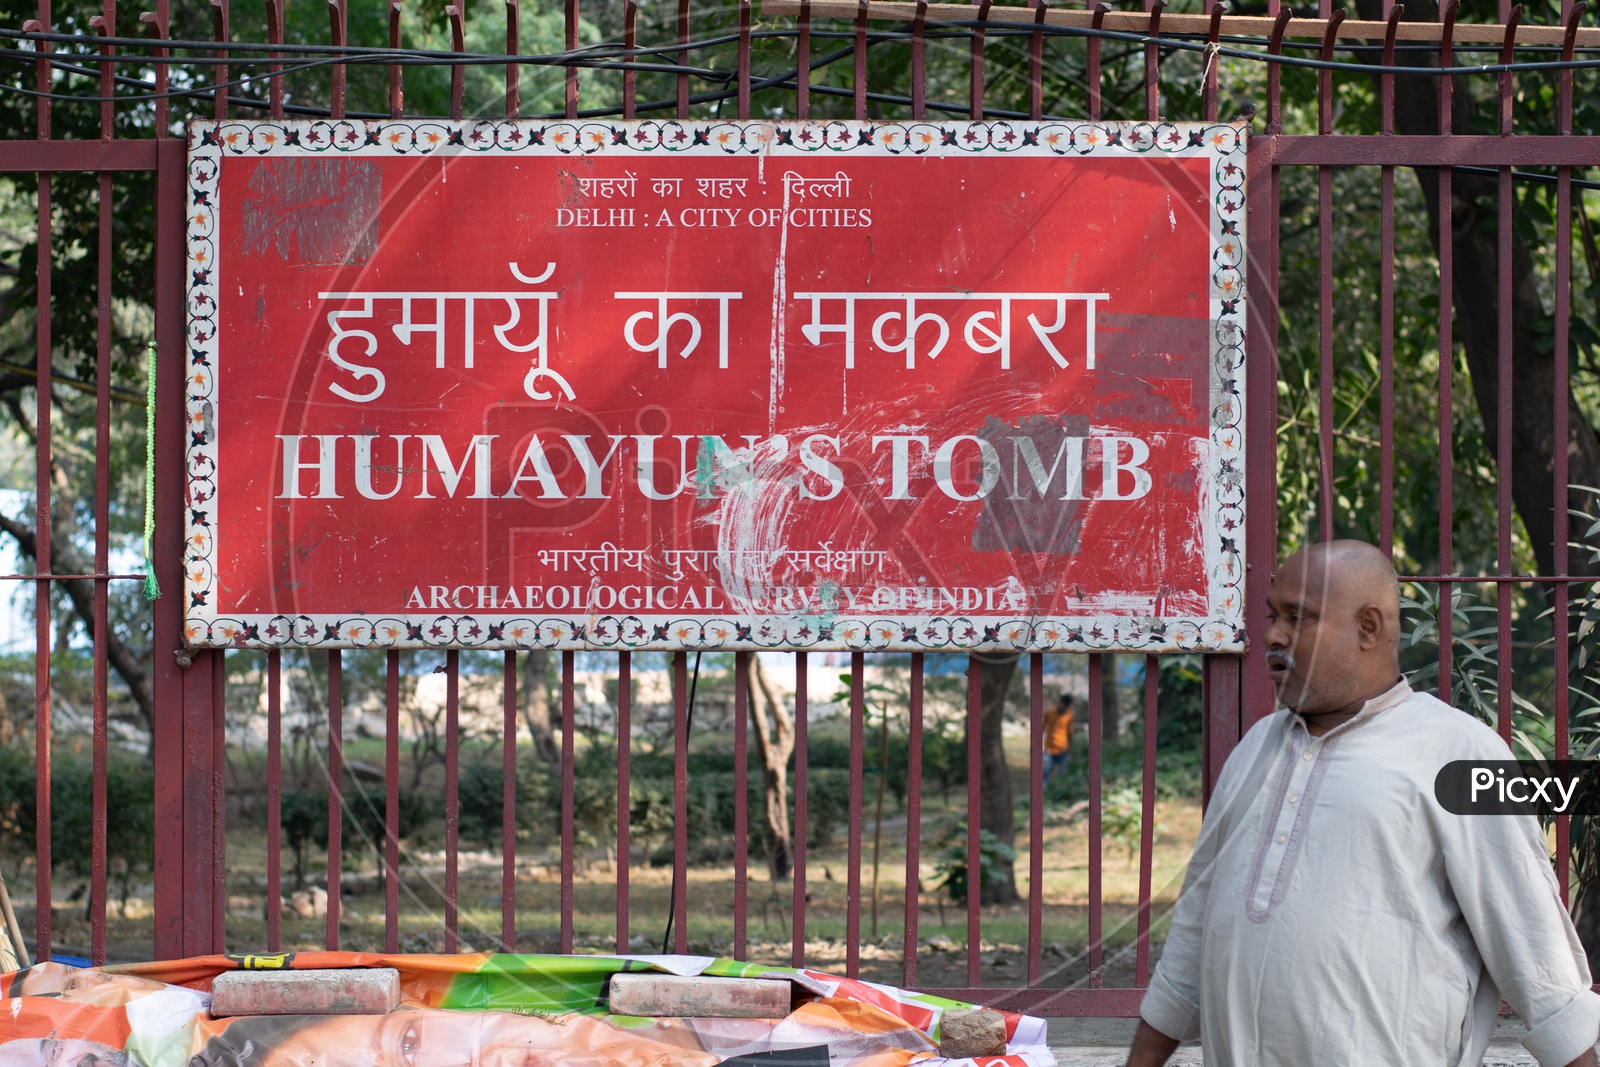 Sign board of Humayun’s Tomb